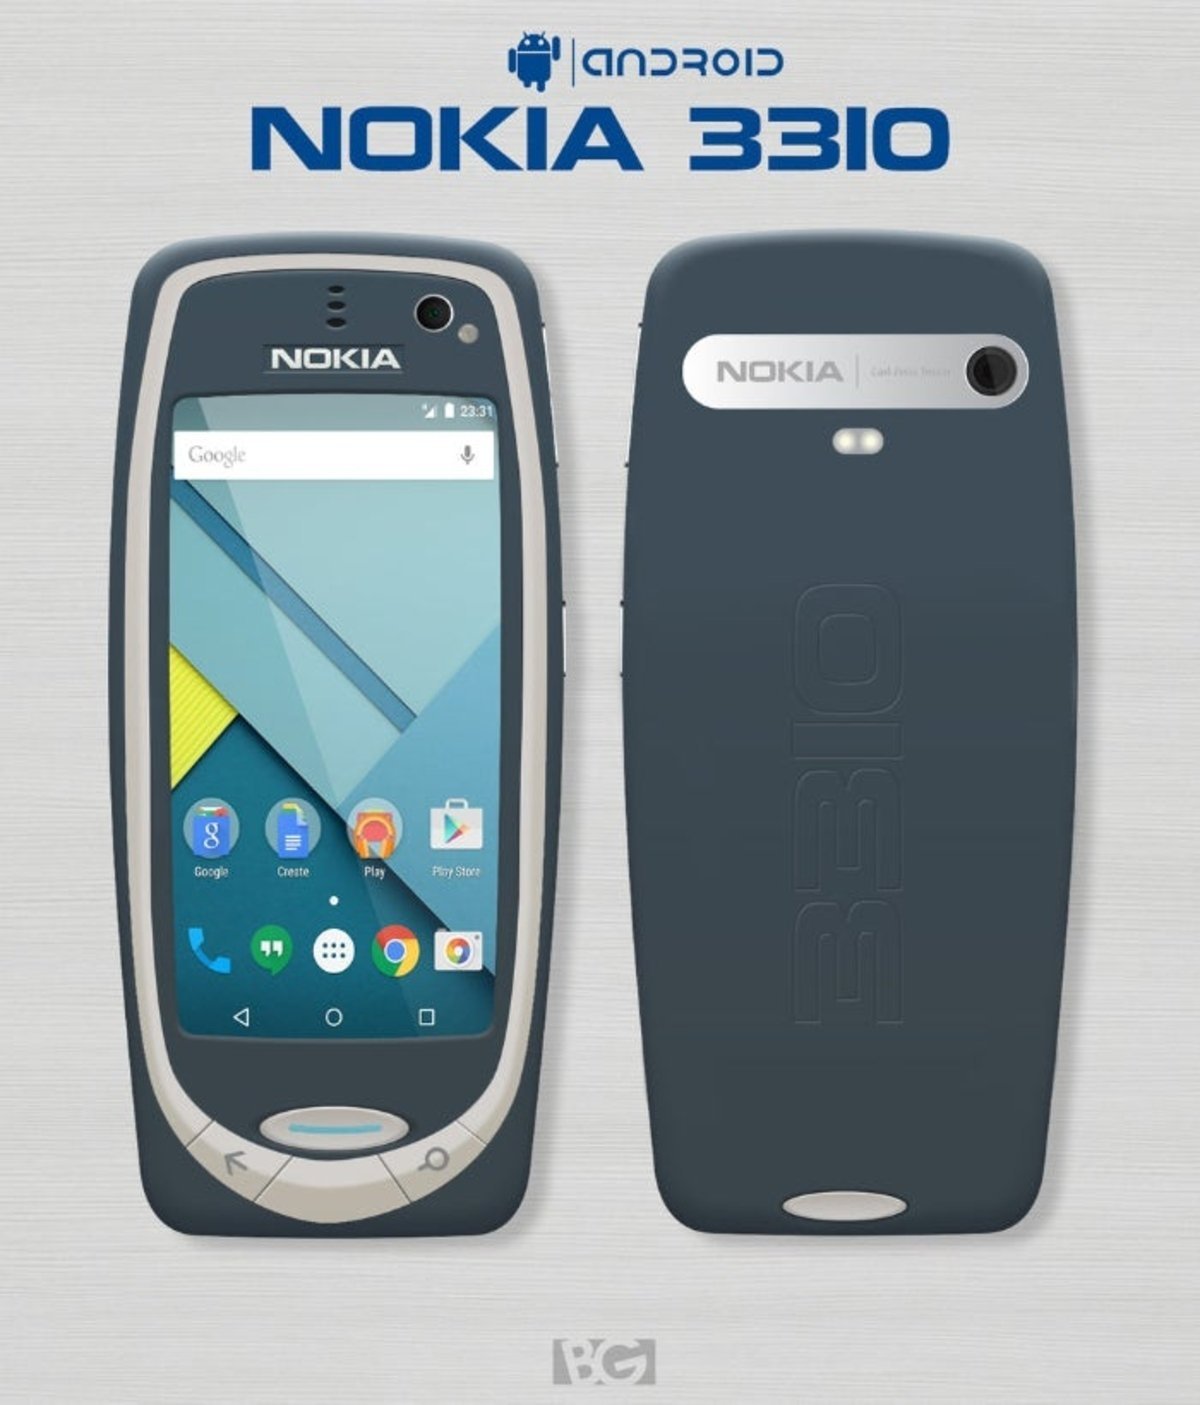 Nokia 3310 Android imagenes concepto